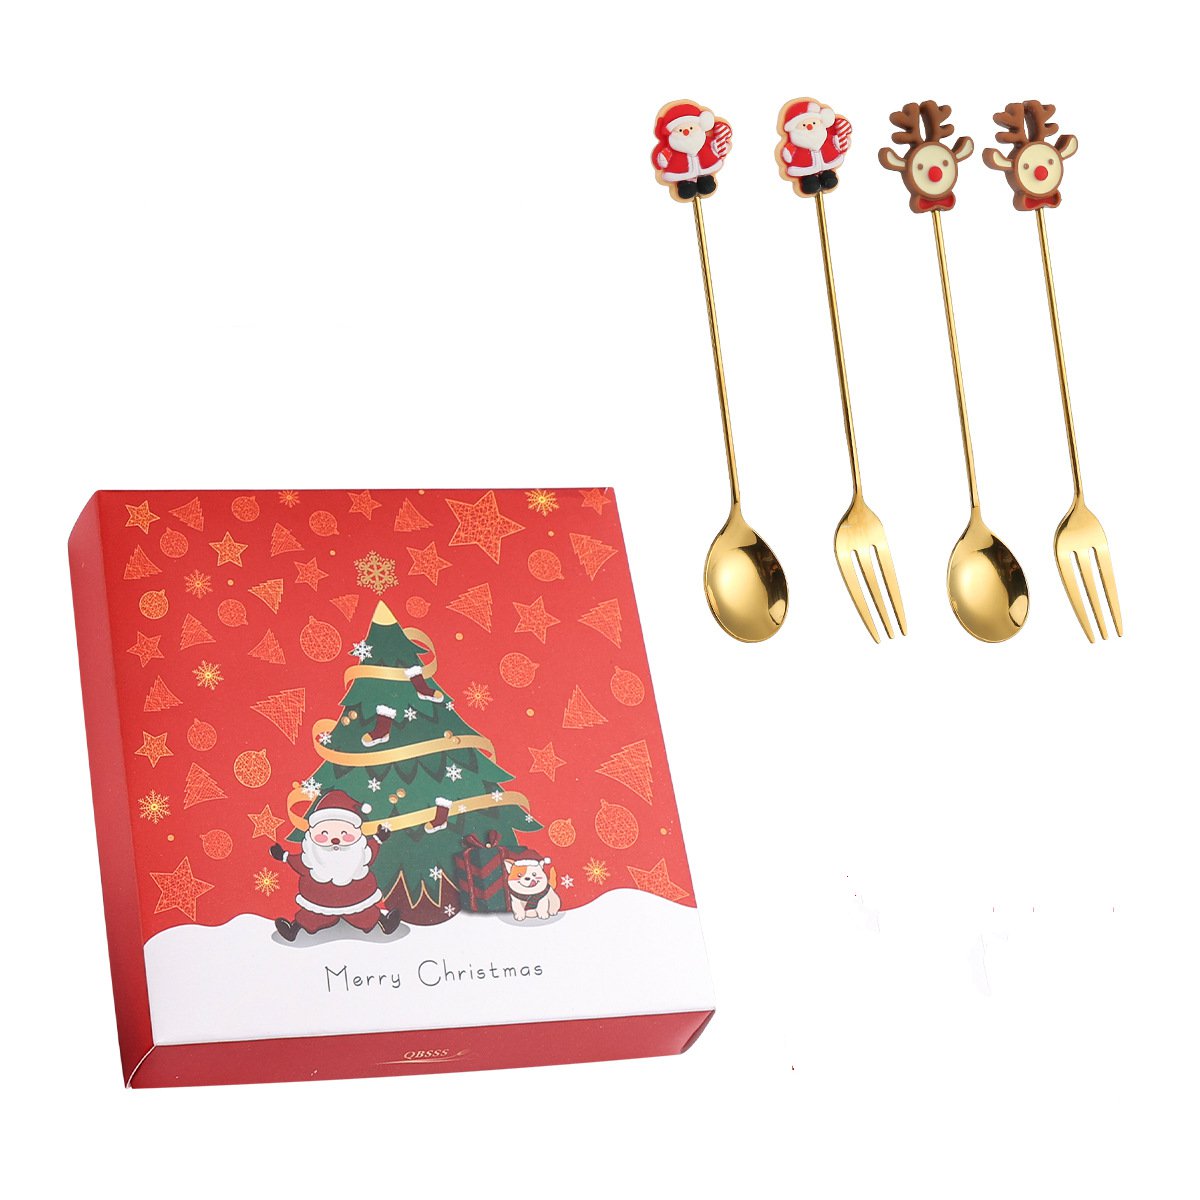 Reindeer Mug and Spoon Rest Set, Set of 2 – Nostalgia Christmas Shop